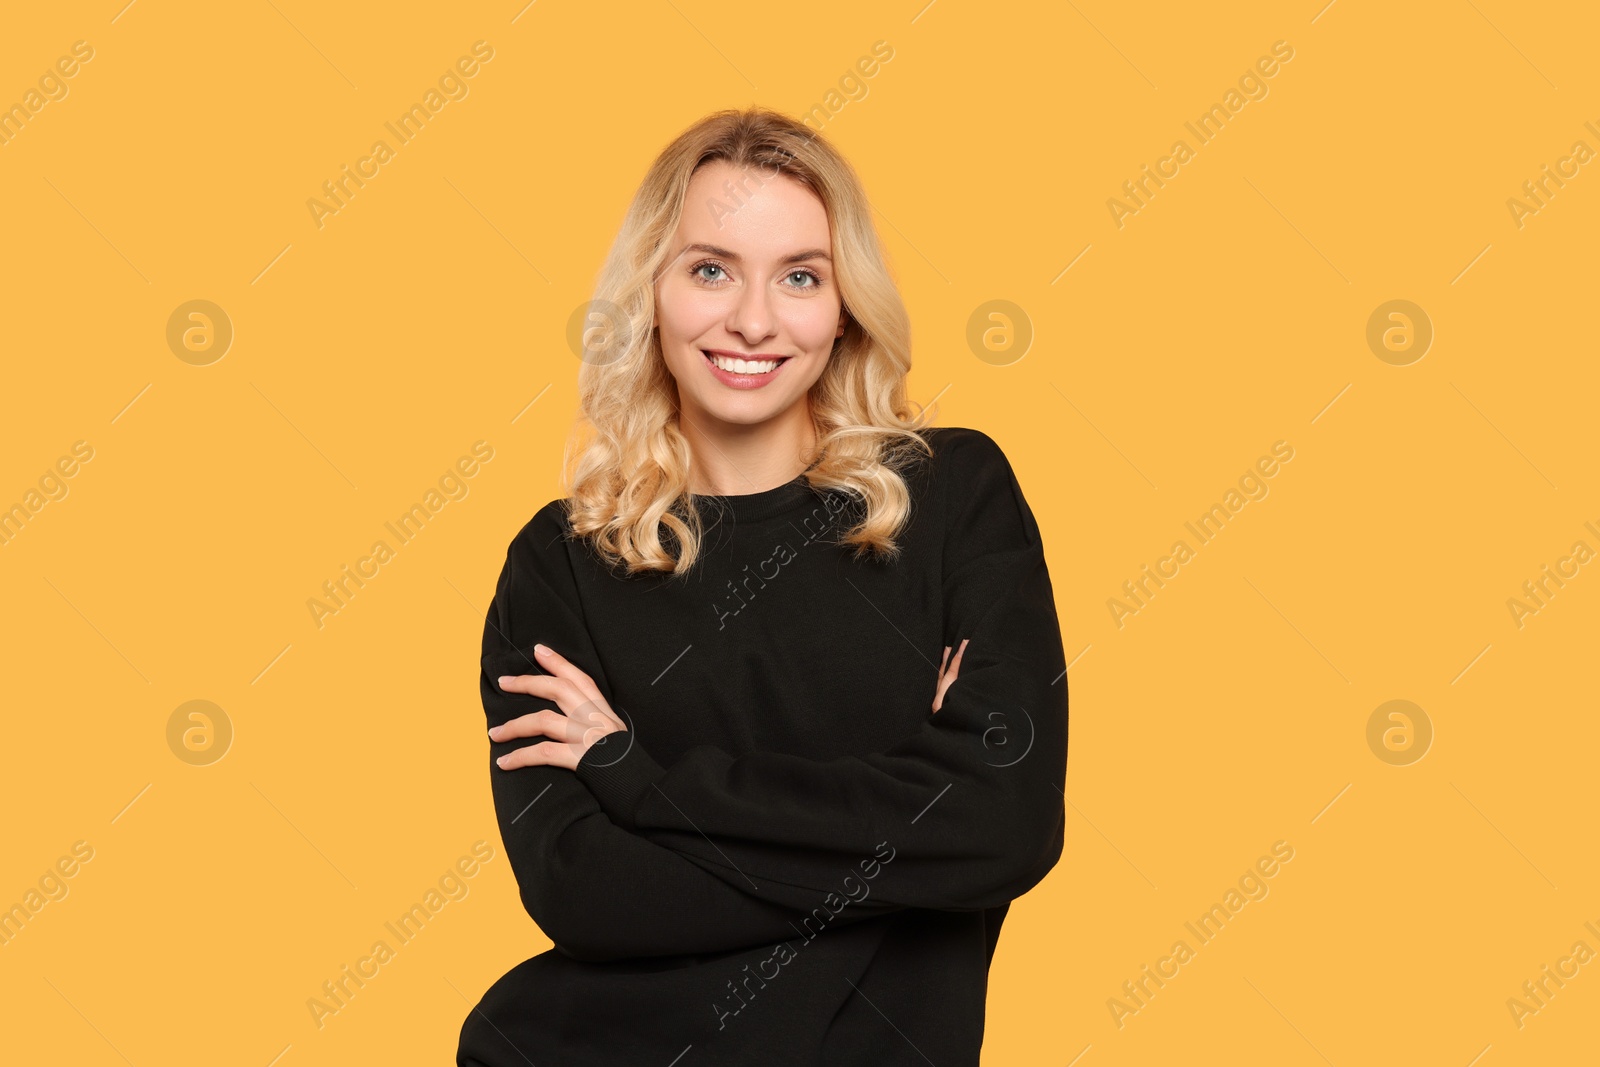 Photo of Happy woman in stylish warm sweater on orange background